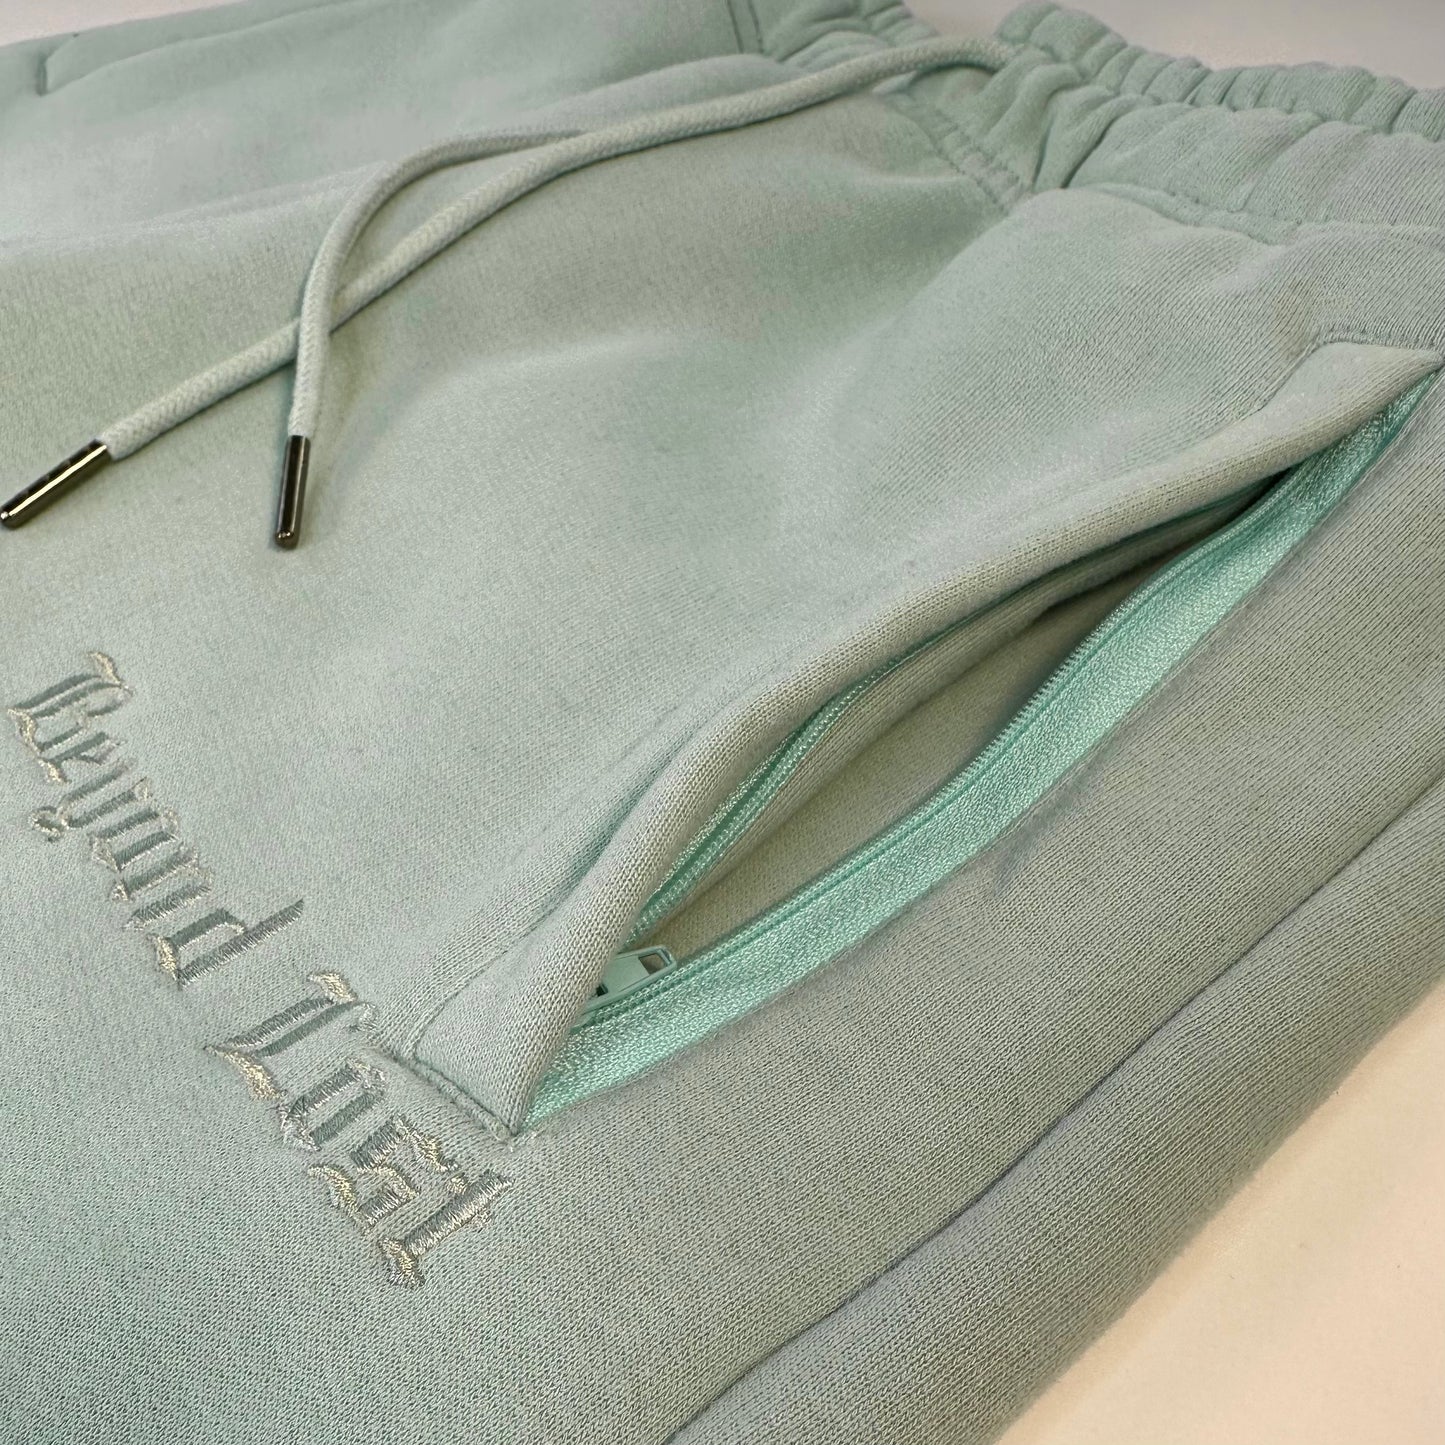 Blue Ocean Mist Sweatpants: Blue Monochrome Embroidery   3 Zip pockets